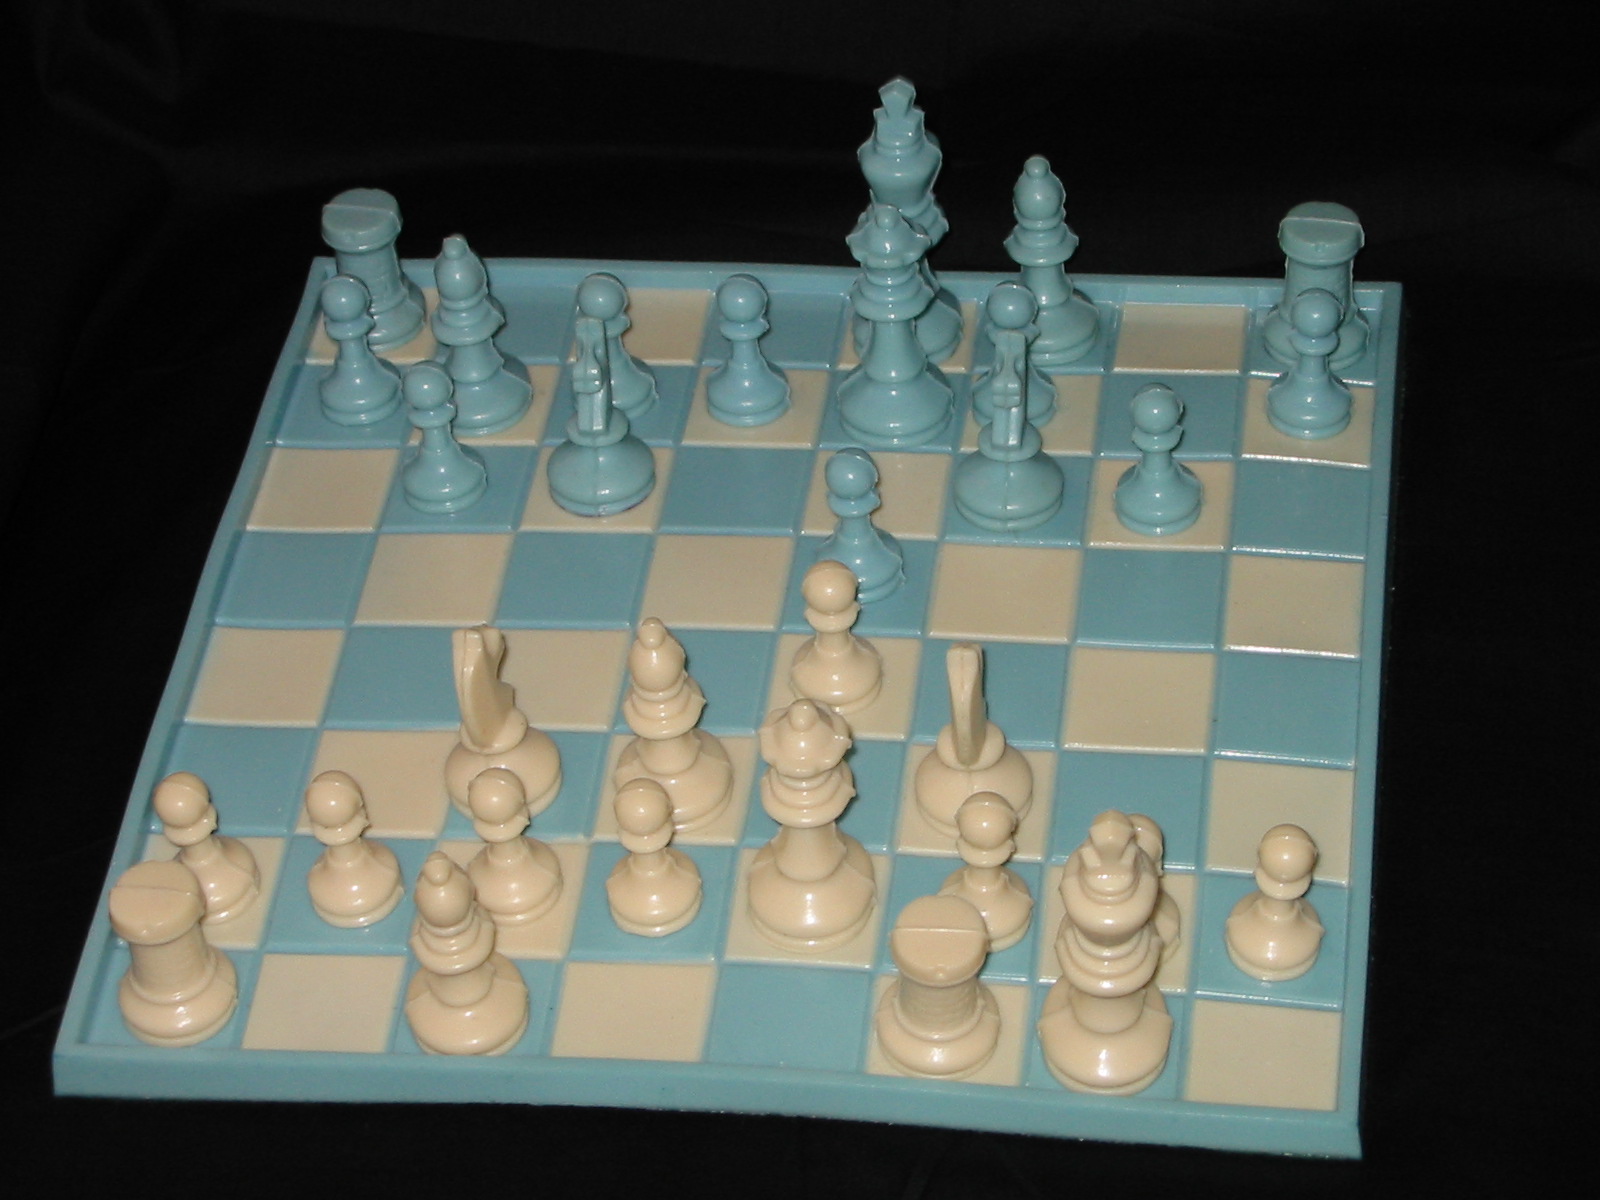 Soft Rubber Chess Set